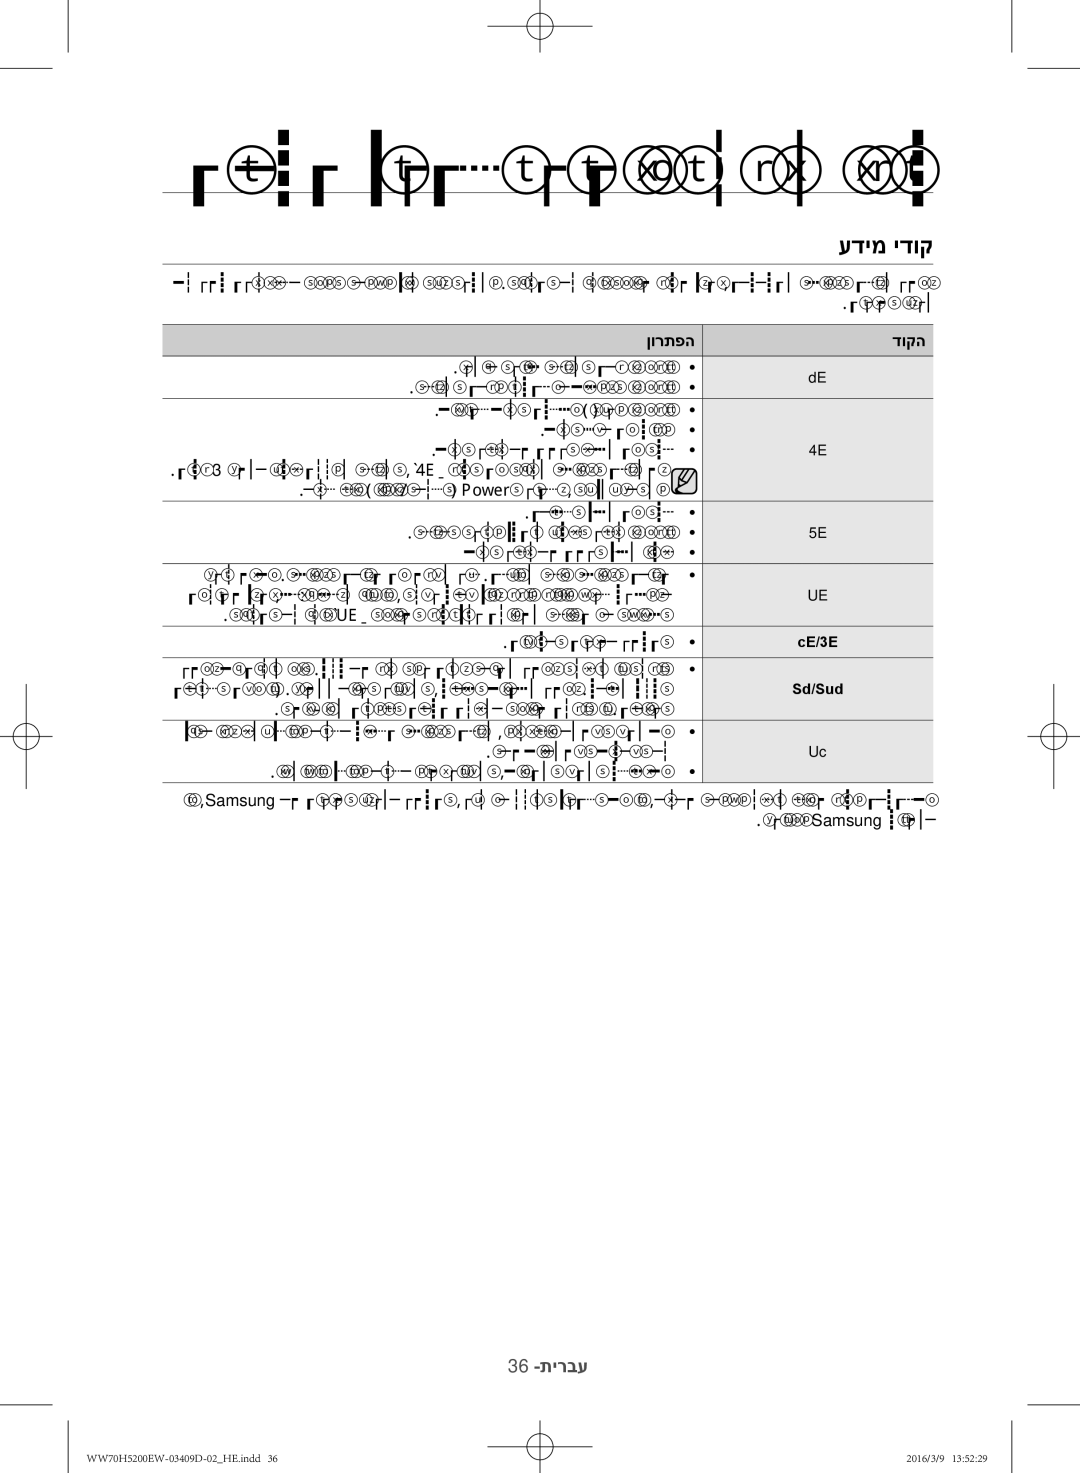 Samsung WW70H5200EW/KJ manual עדימ ידוק, ןורתפה דוקה 